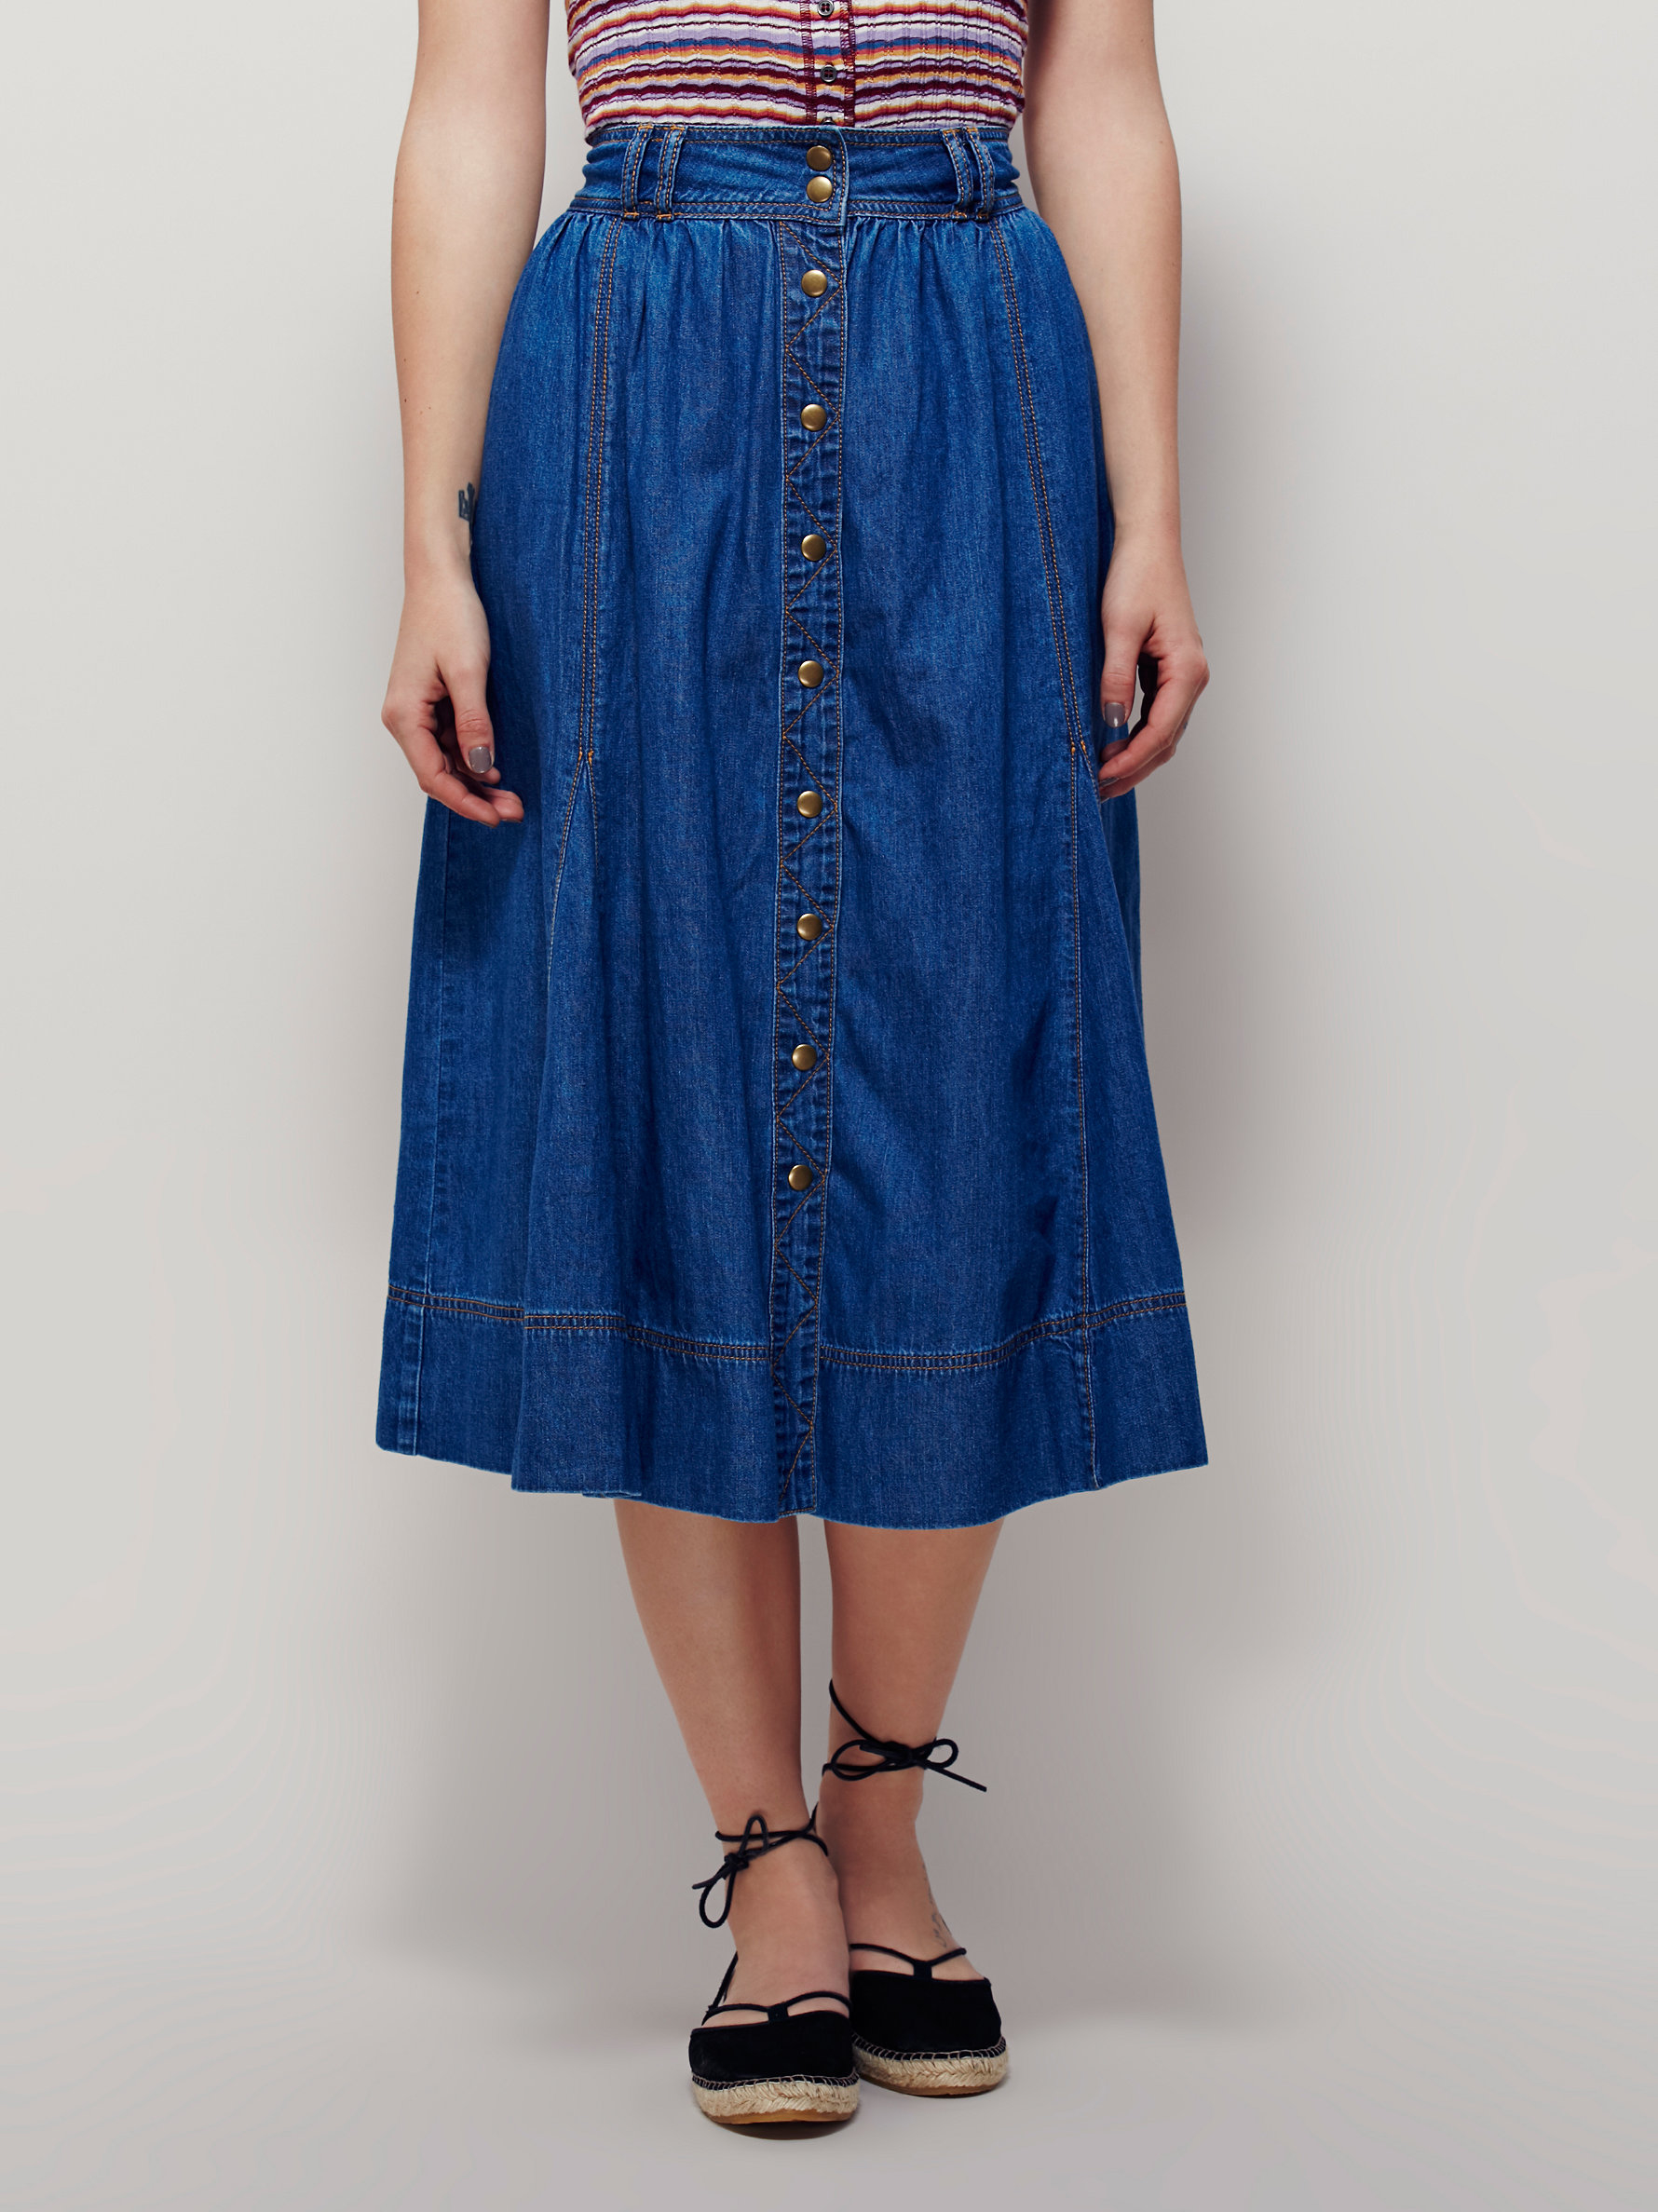 Lyst - Free People Womens Margo Denim Midi Skirt in Blue